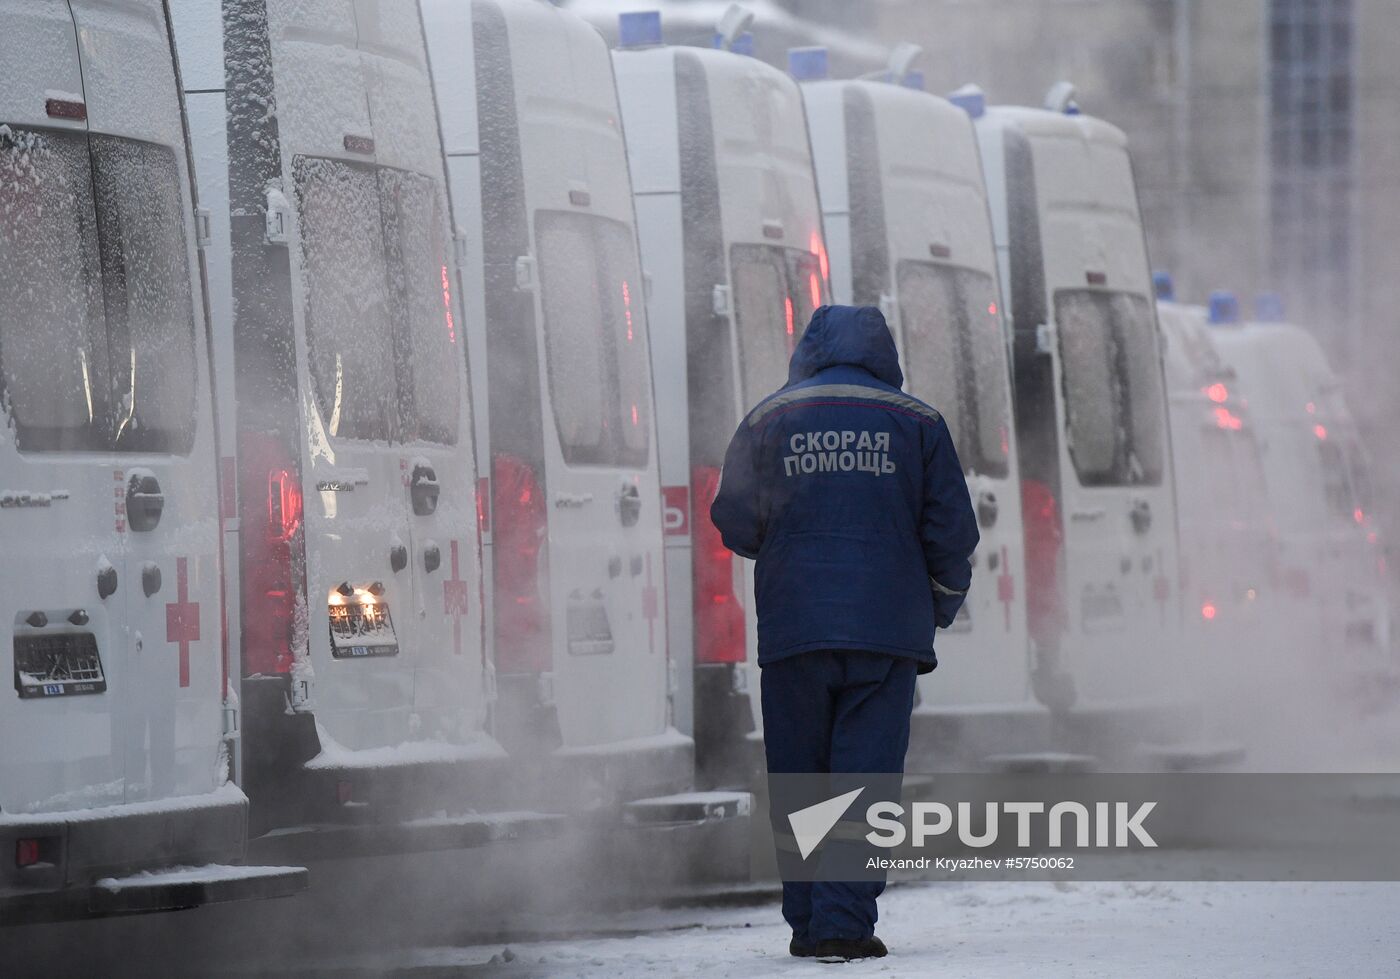 Russia New Ambulance Cars